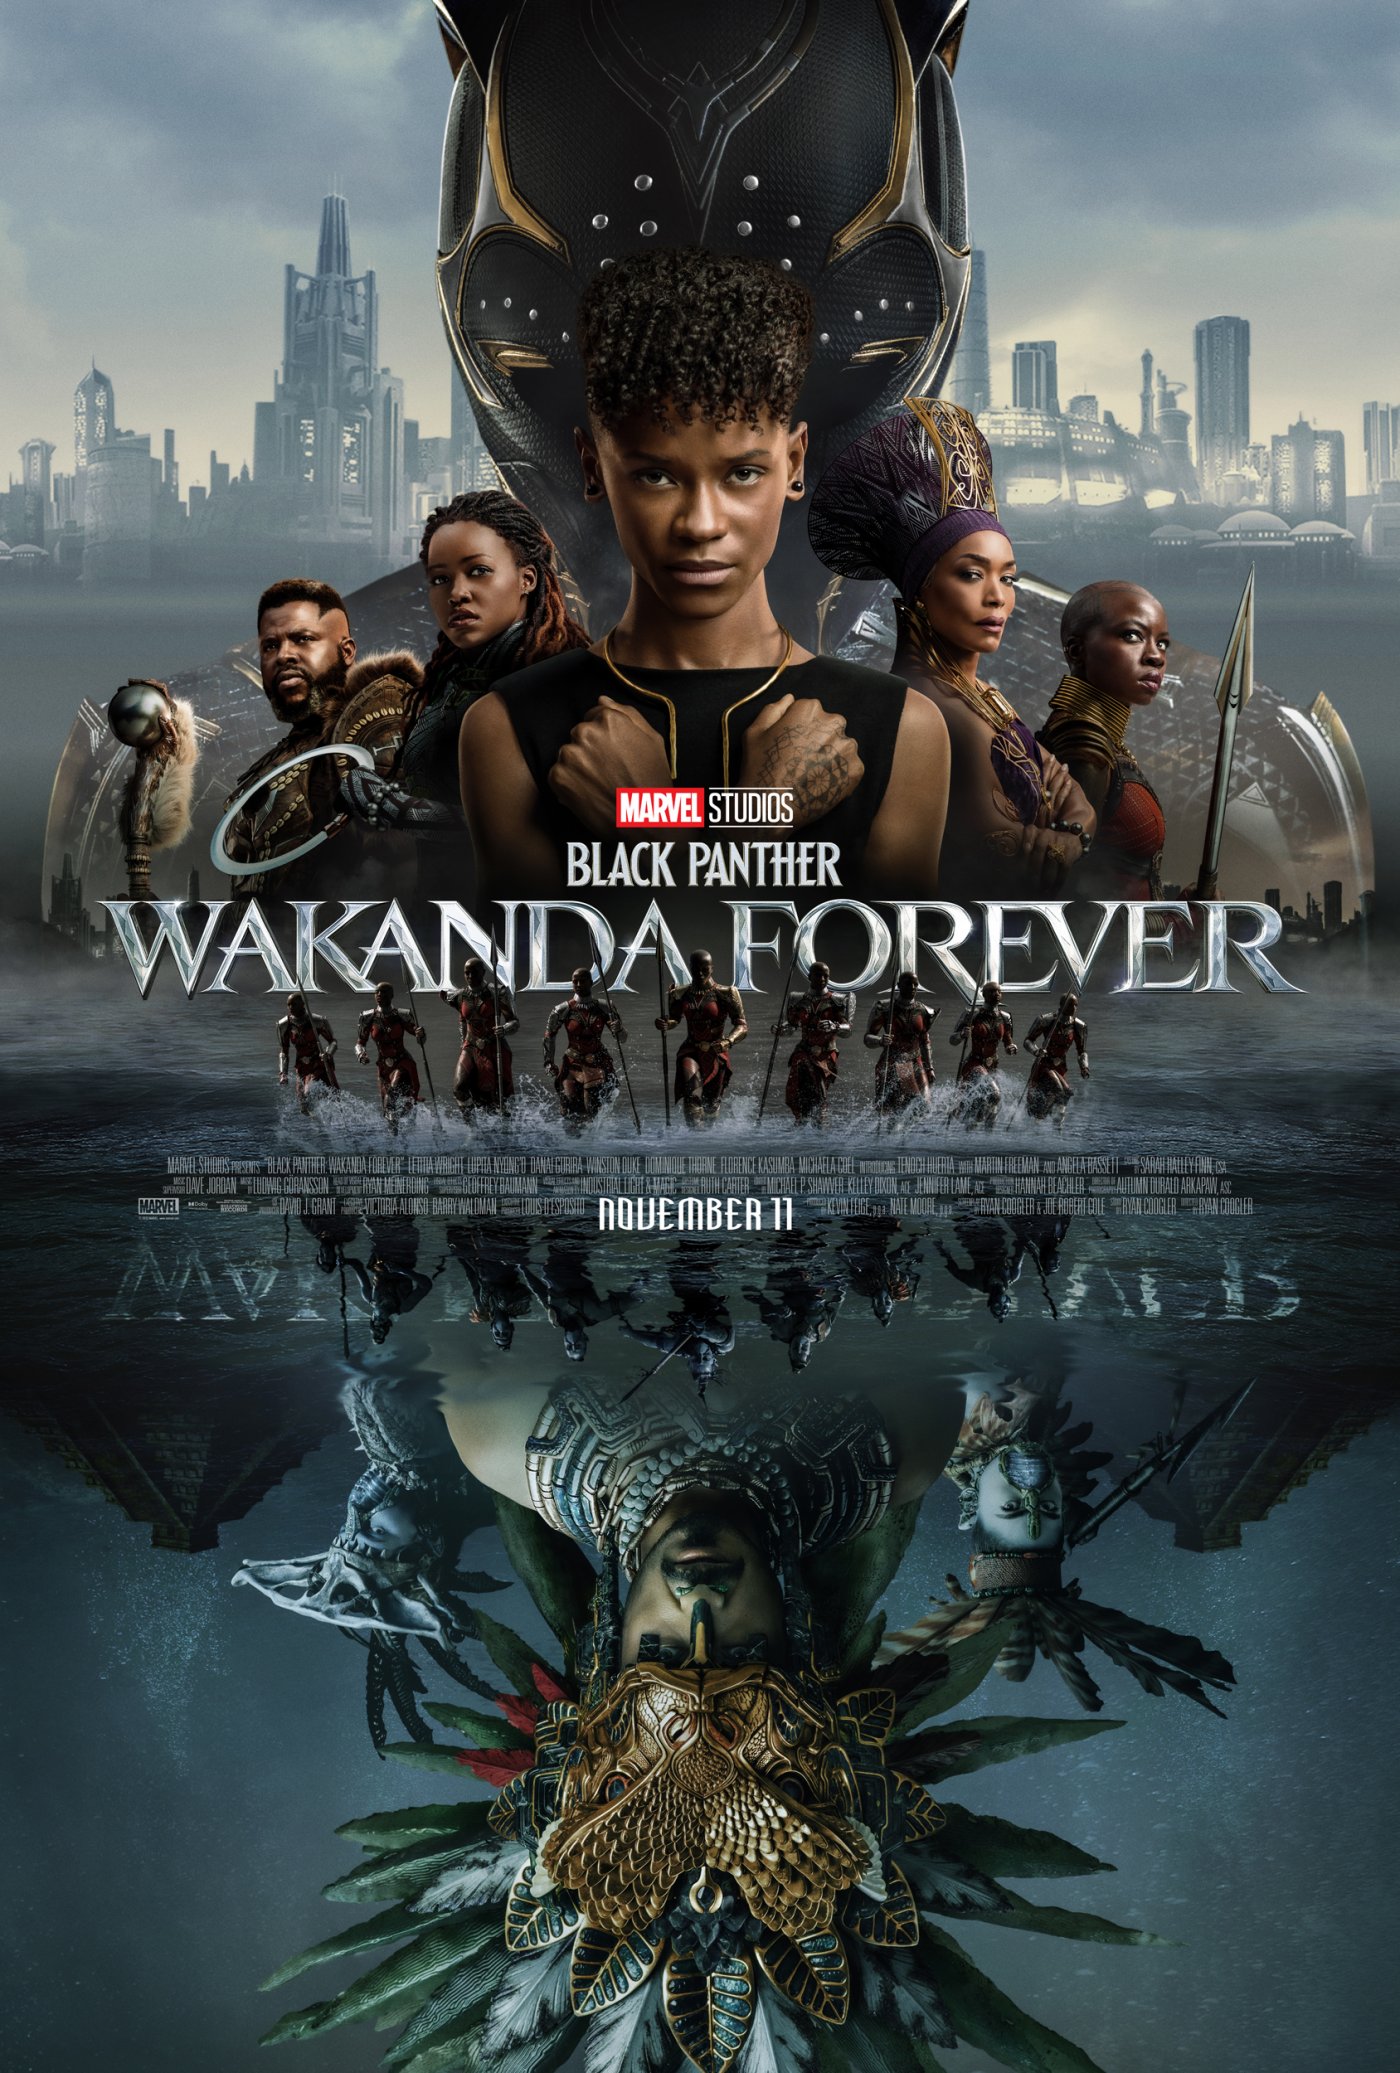 https://movieplayer.it/film/black-panther-wakanda-forever_50021/